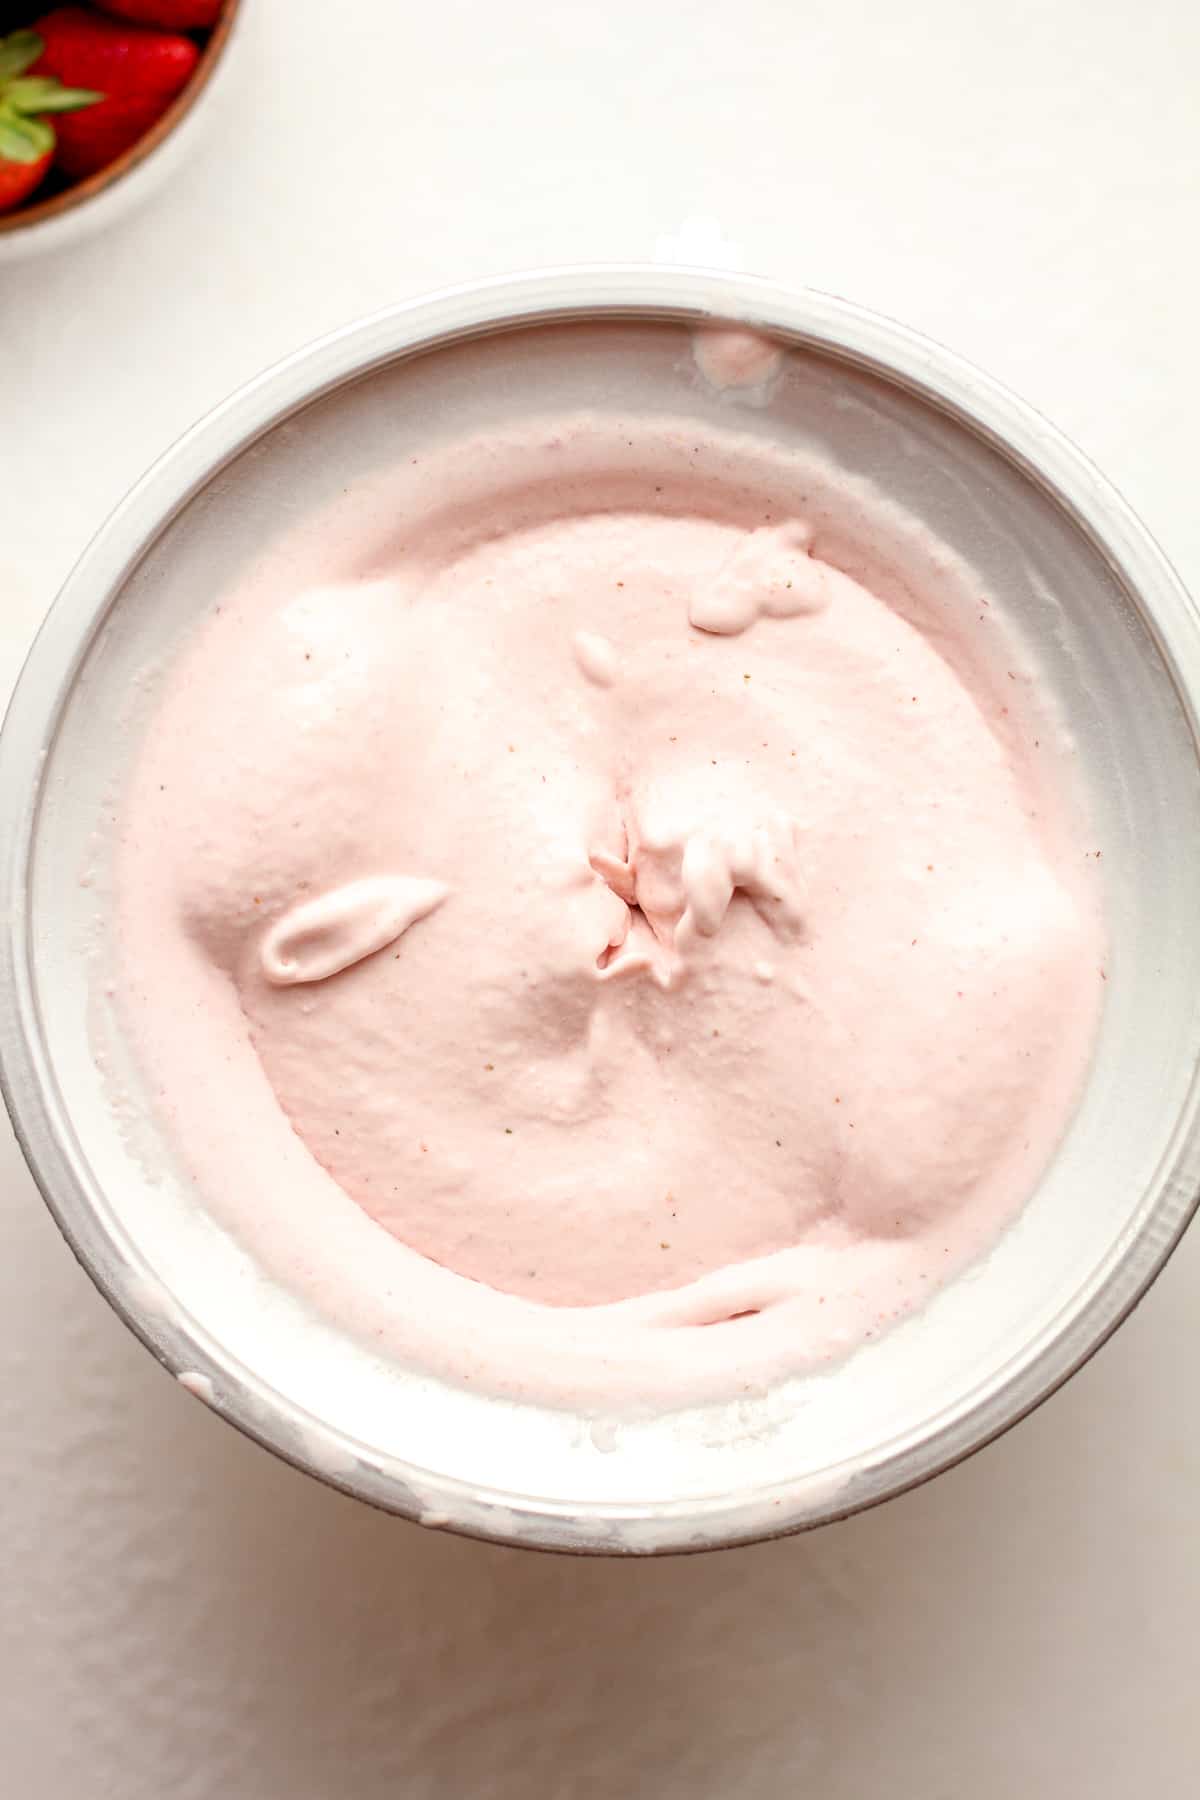 A KitchenAid attachment of homemade strawberry ice cream.